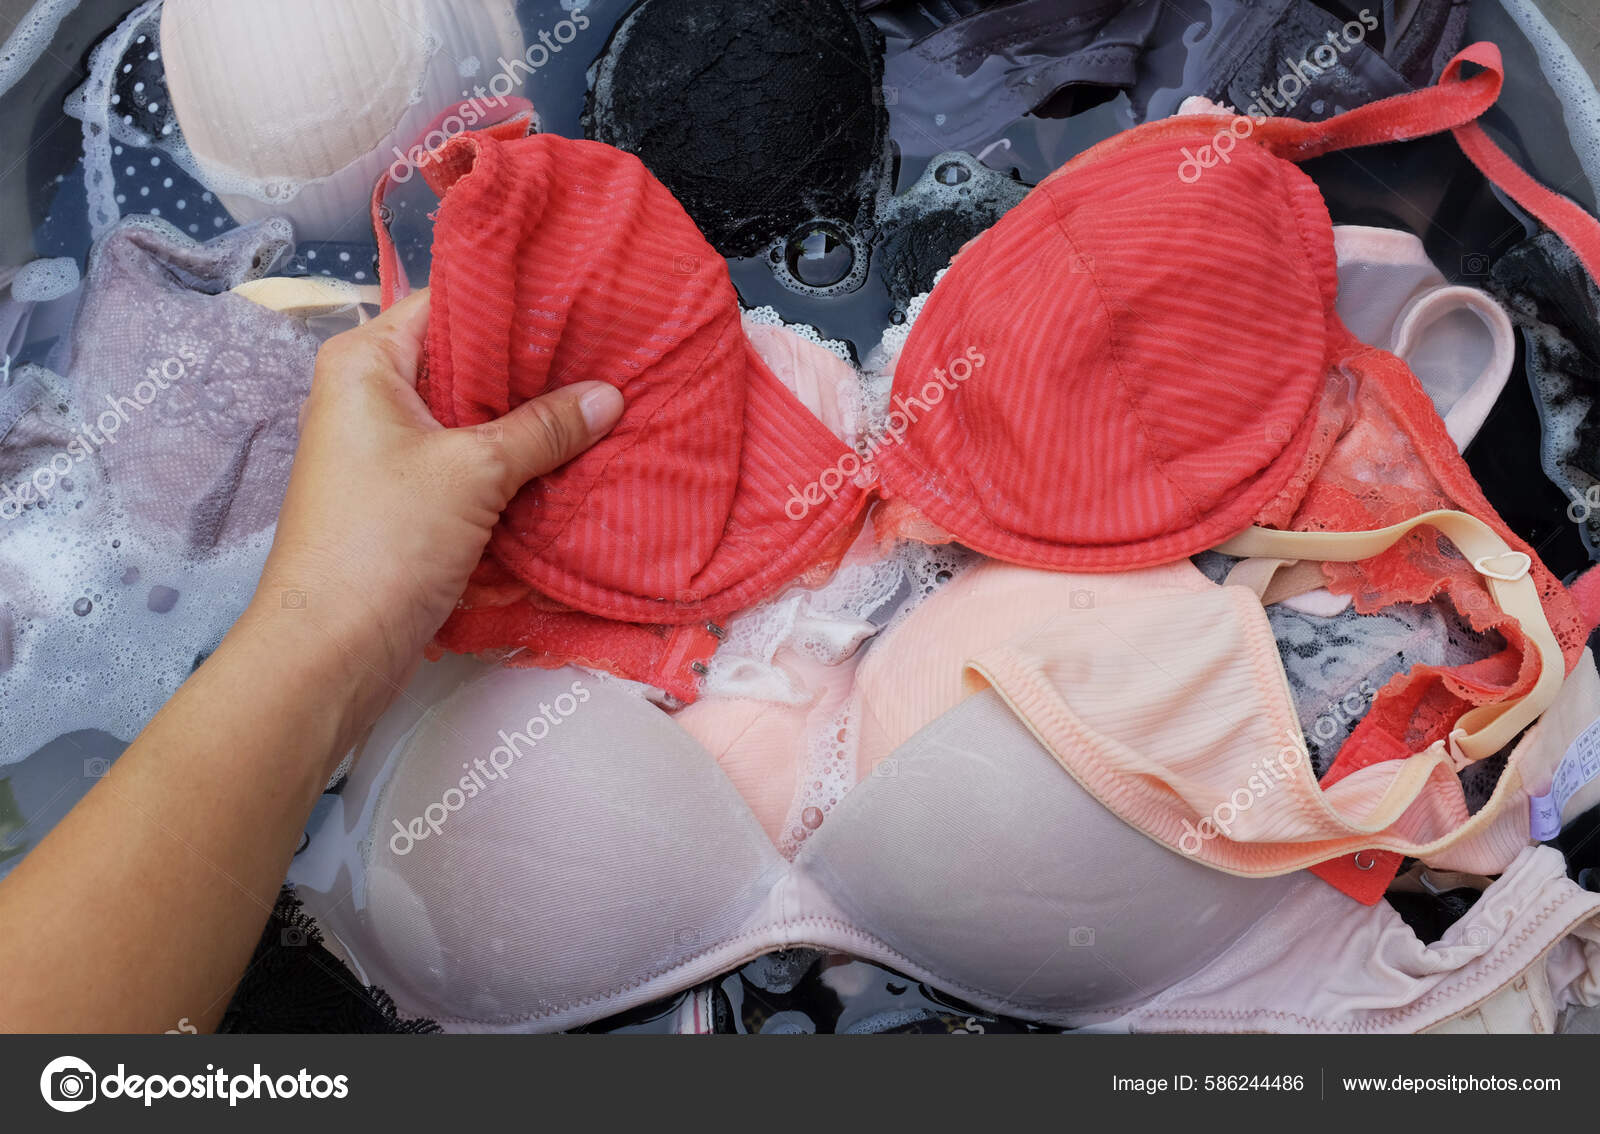 https://st.depositphotos.com/48430940/58624/i/1600/depositphotos_586244486-stock-photo-washing-bras-basin-washing-clothes.jpg